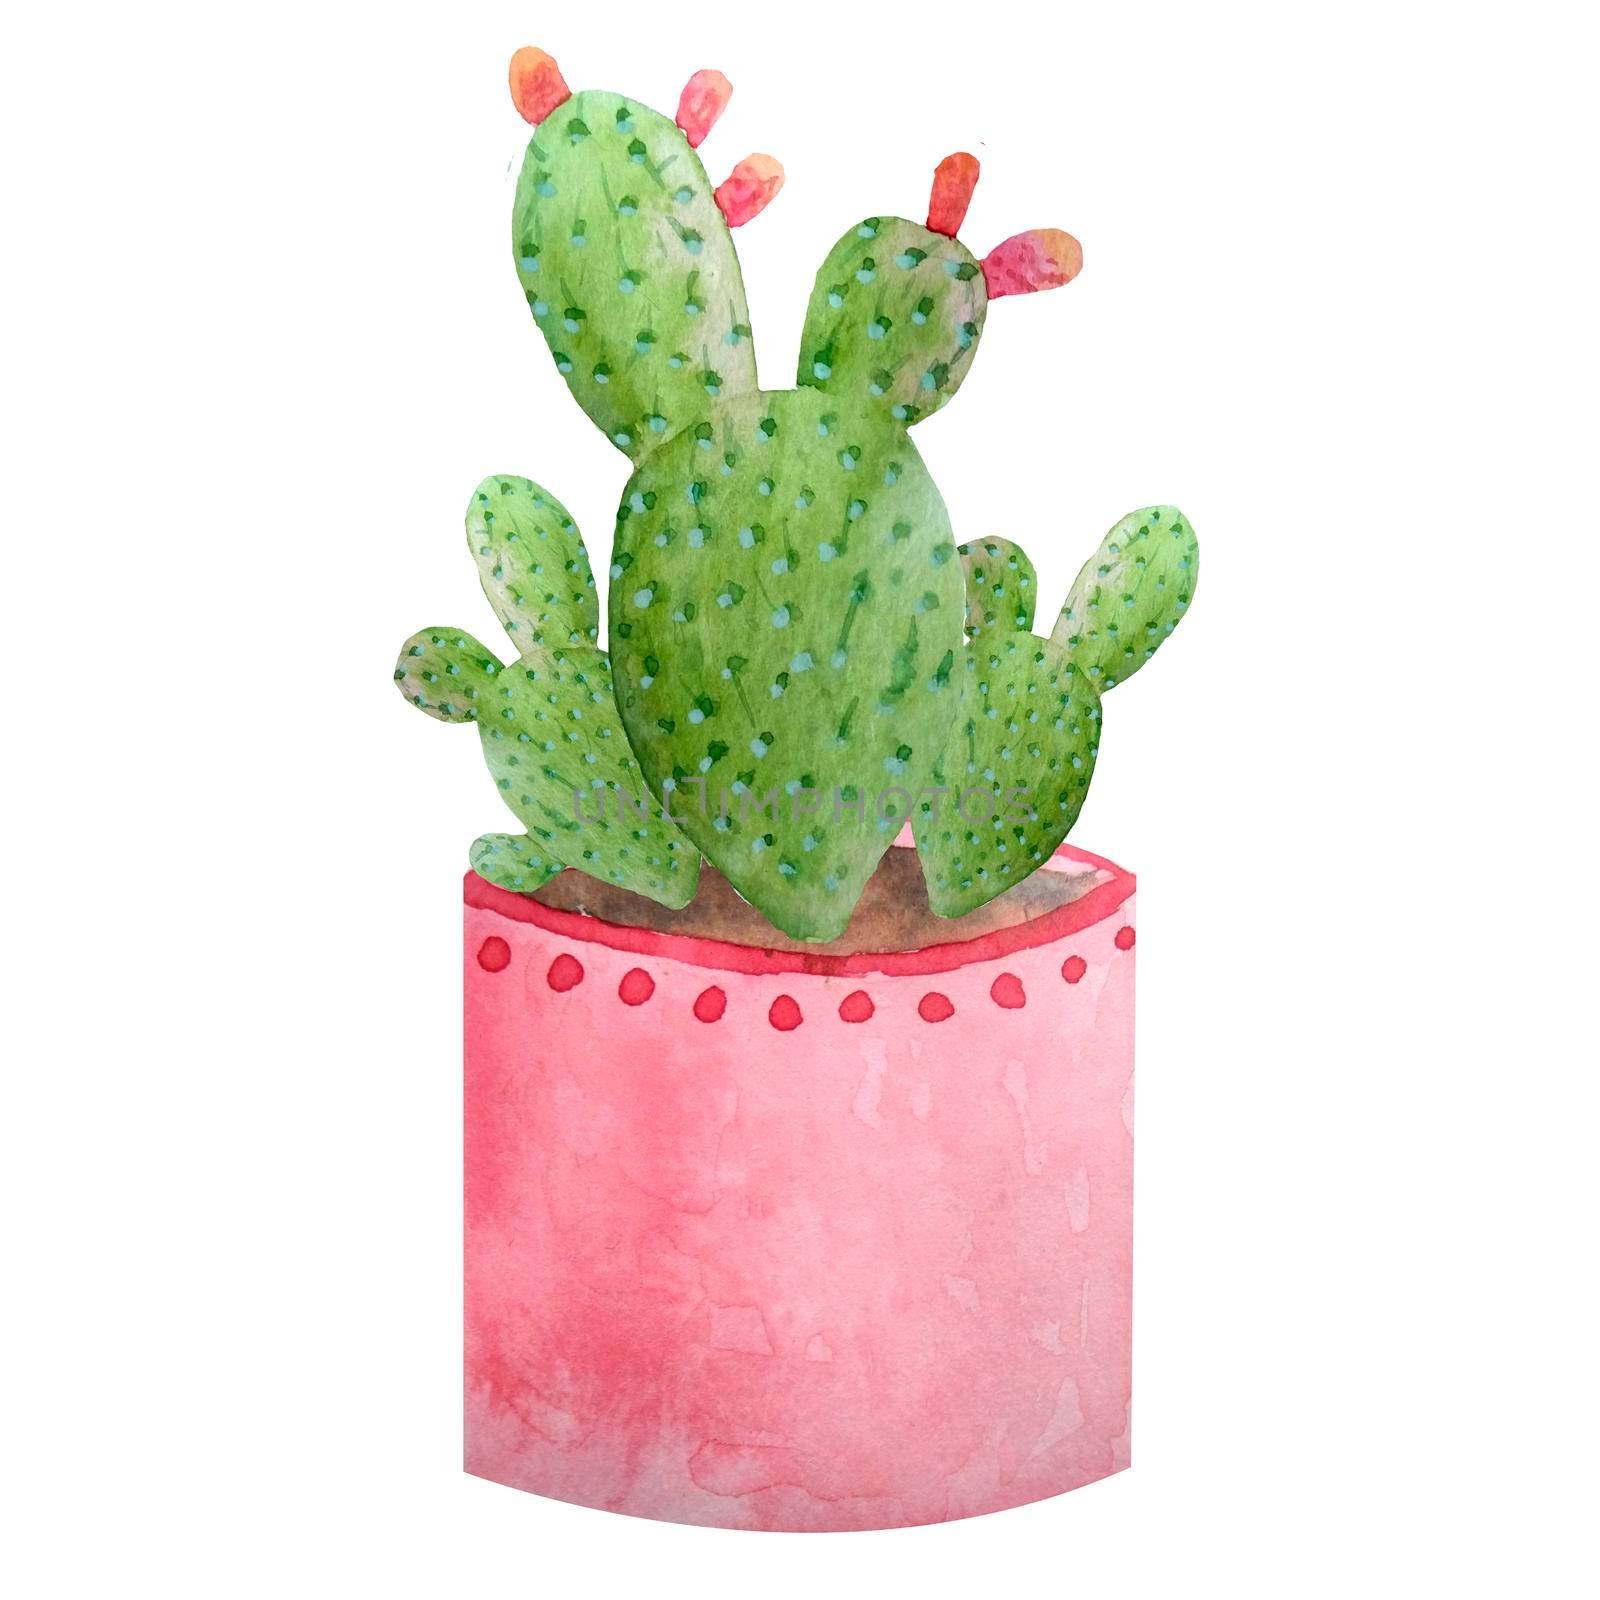 Watercolor cactus cacti succulent in ceramic pot. Potted house green natural plants exotic tropical flowers. Interior decoration botanical illustration vibrant design print